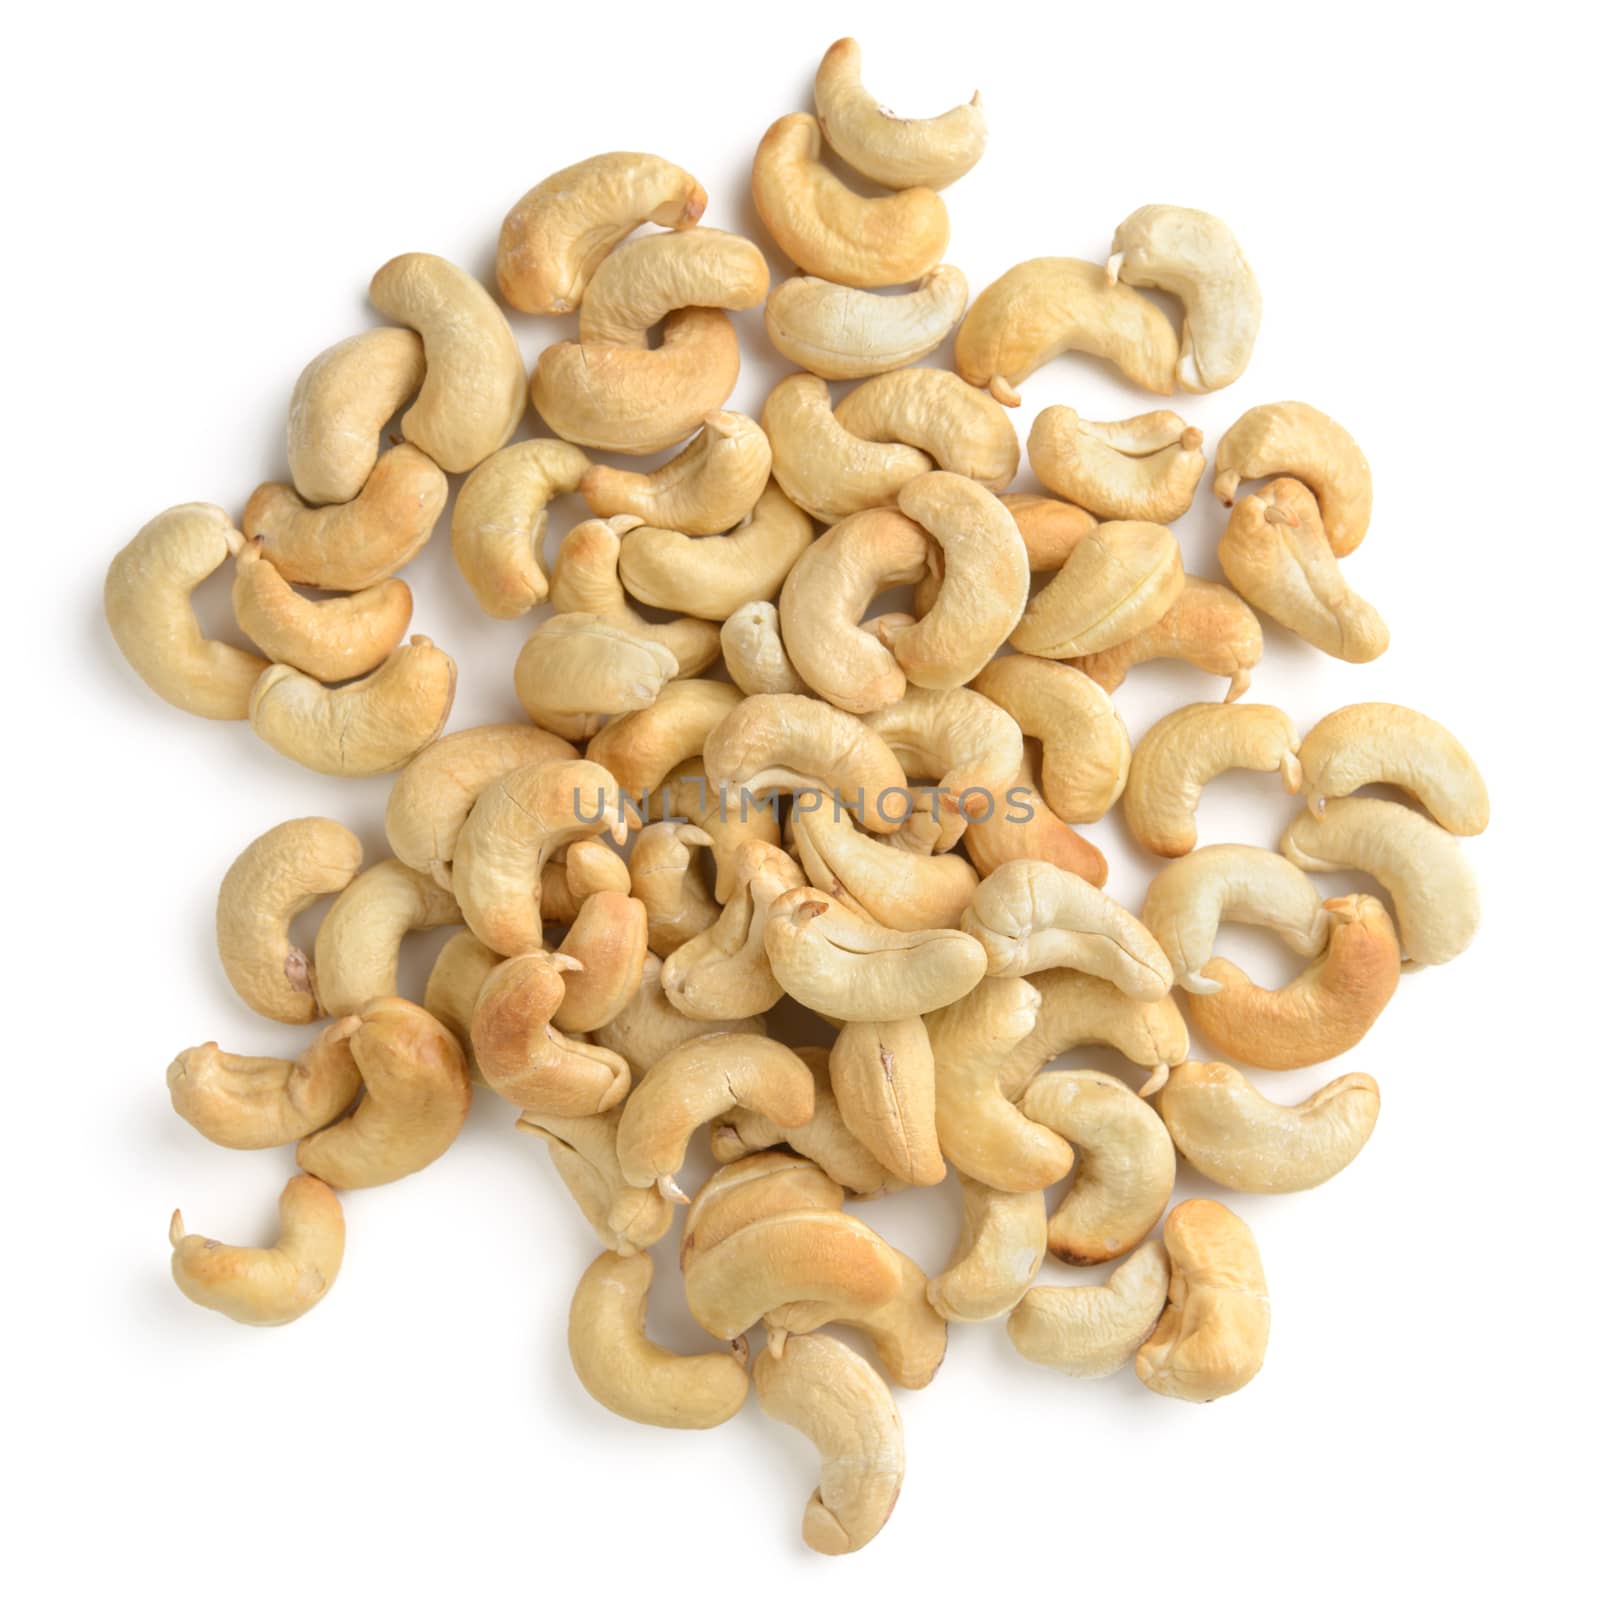 cashew nuts by antpkr